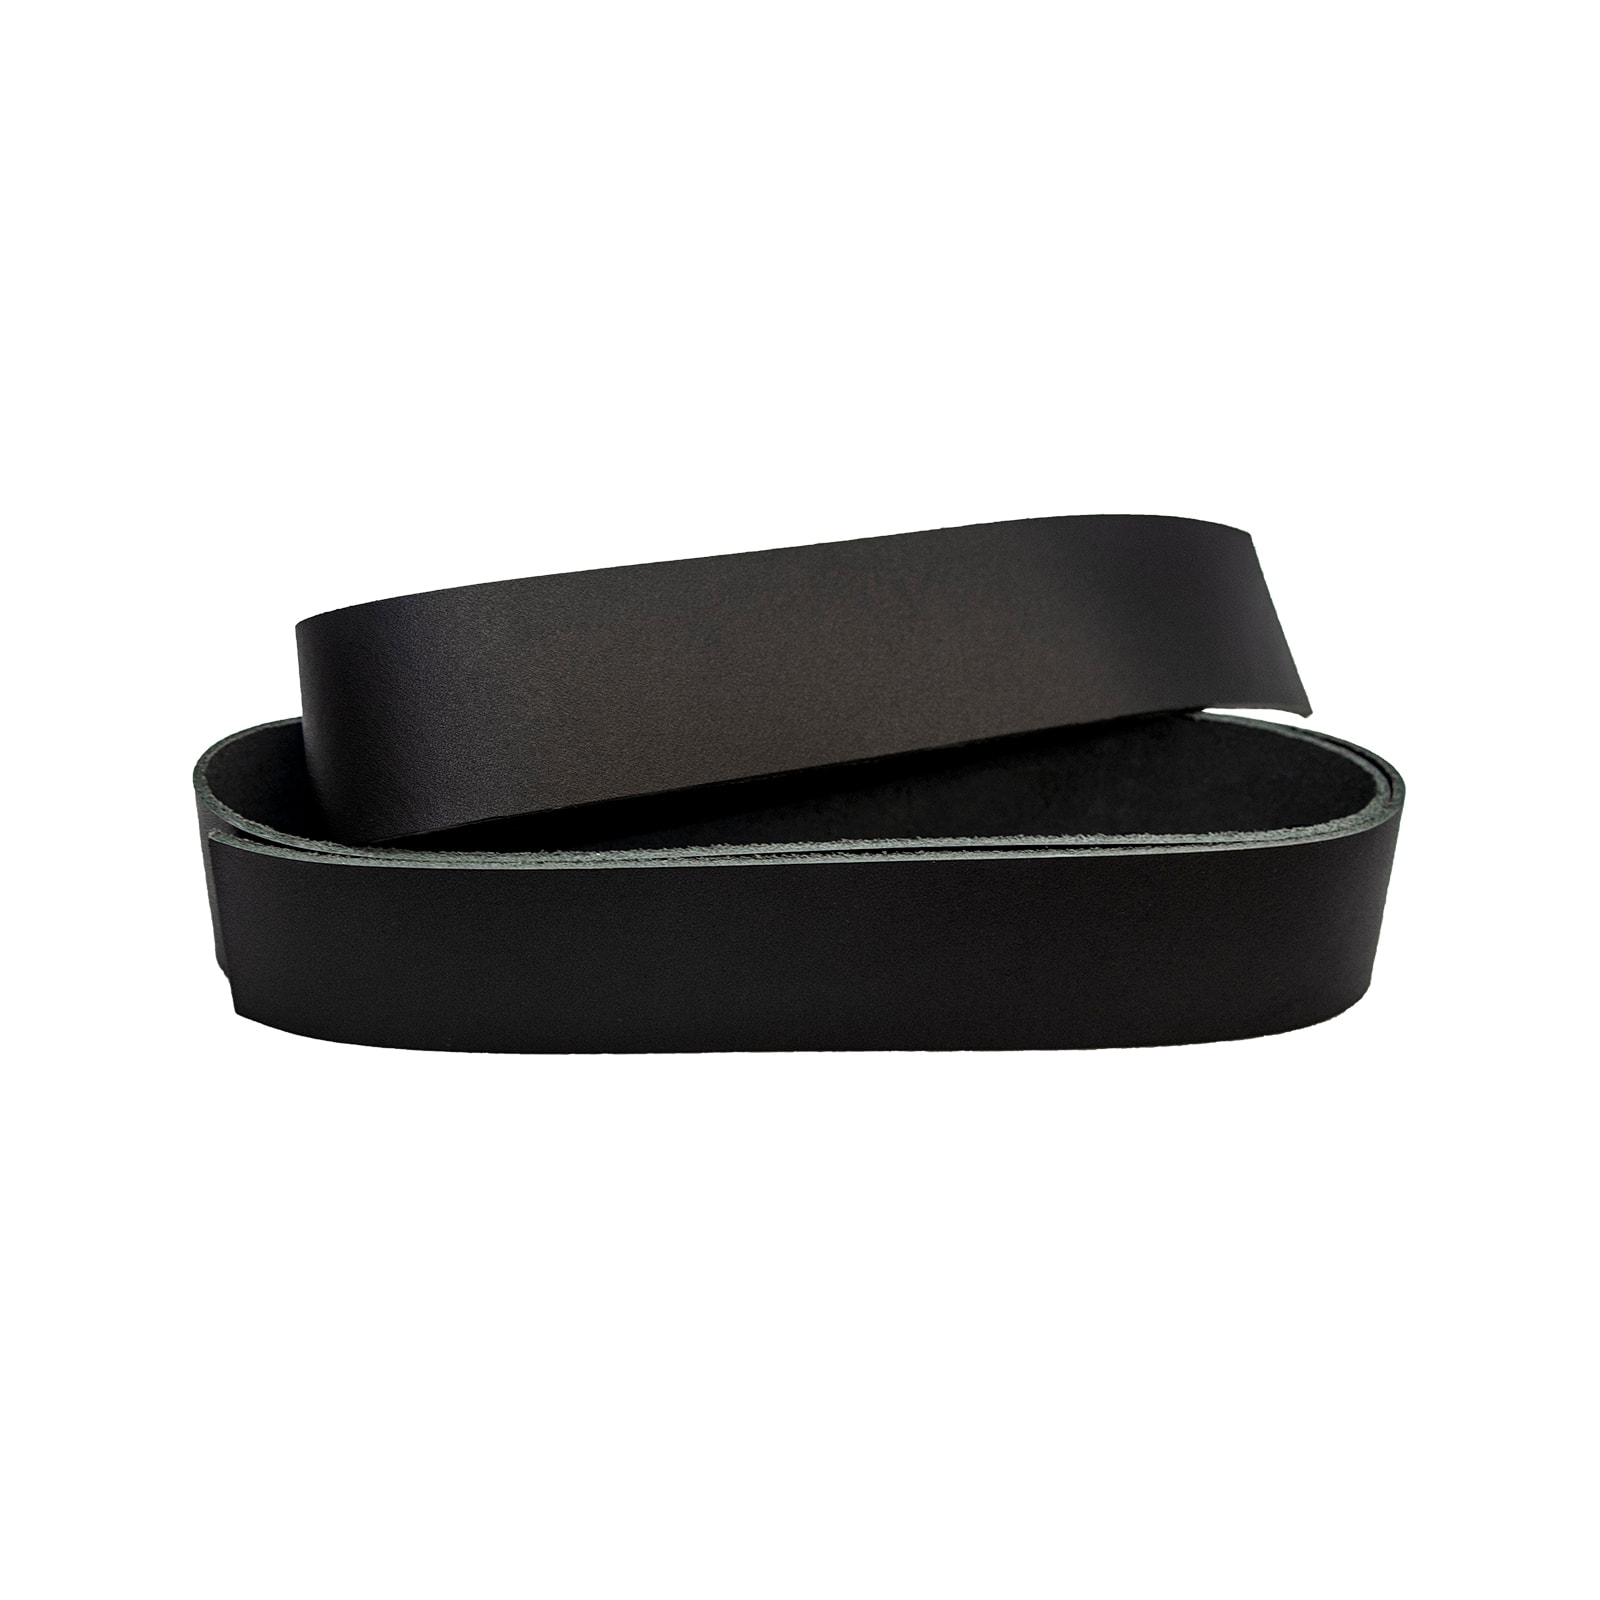 ArtMinds Black Leather Belt Strap - each